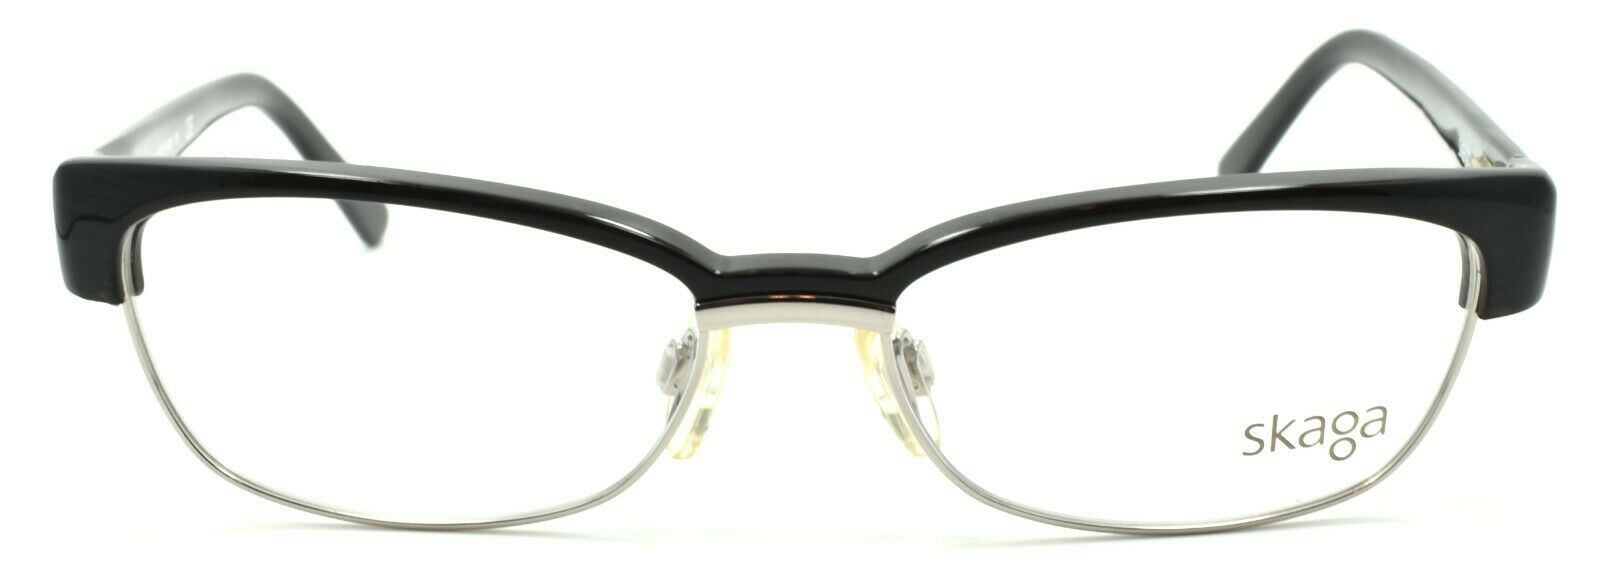 2-Skaga 3844 Anna 9501 Women's Eyeglasses Frames Cat Eye 51-15-135 Black-IKSpecs